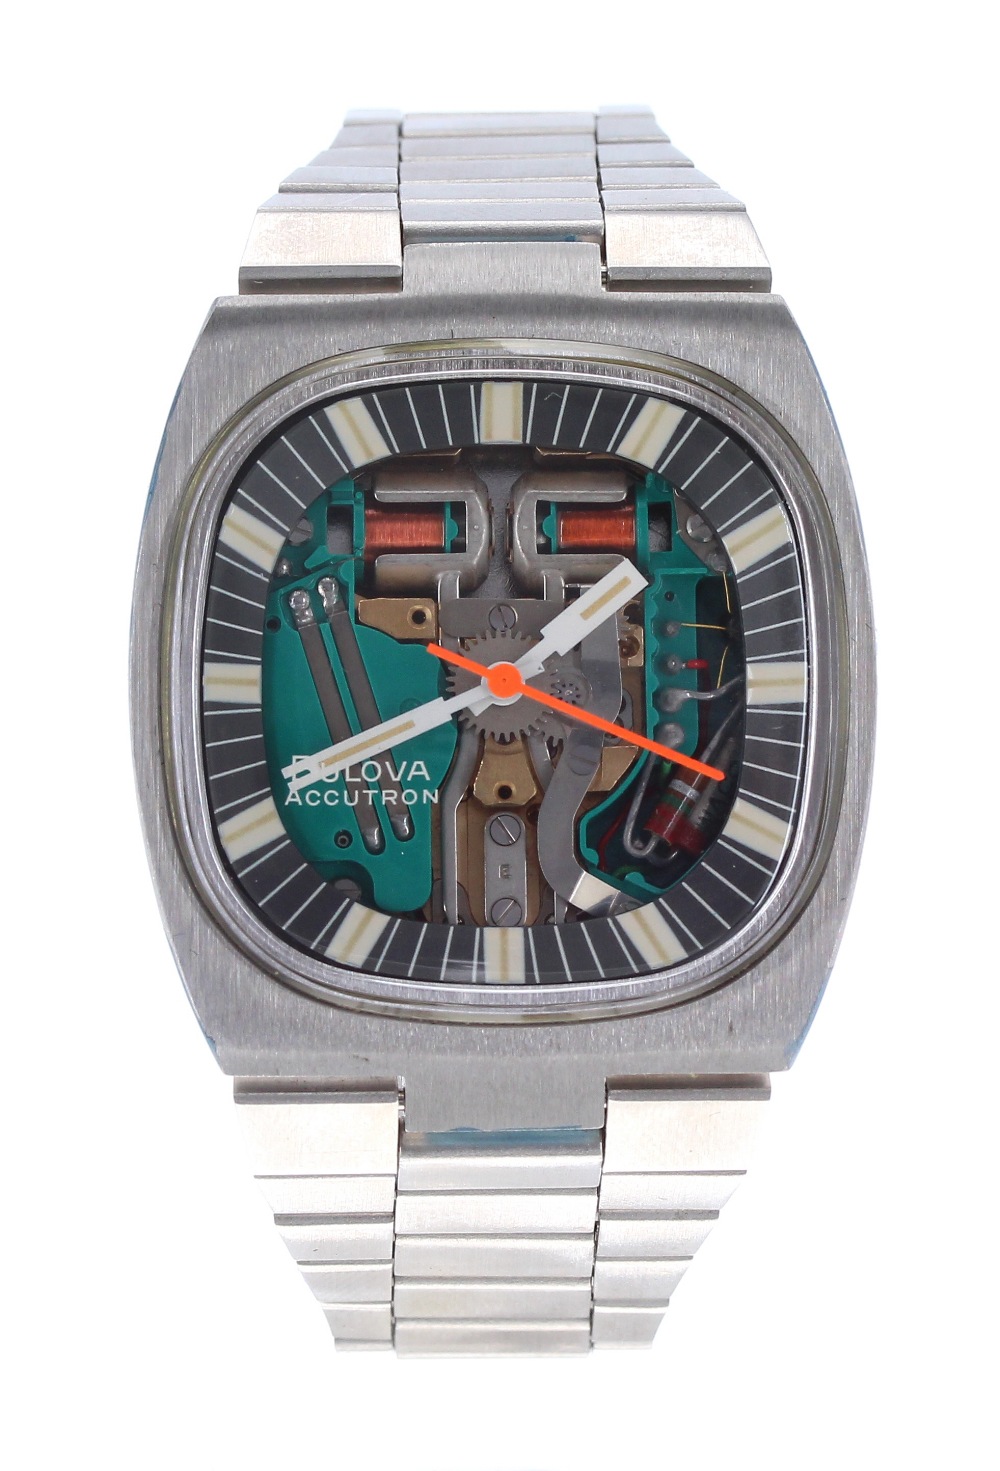 Bulova Accutron Spaceview stainless steel gentleman's bracelet watch, ref. 7369, no. 482995, circa - Image 2 of 5